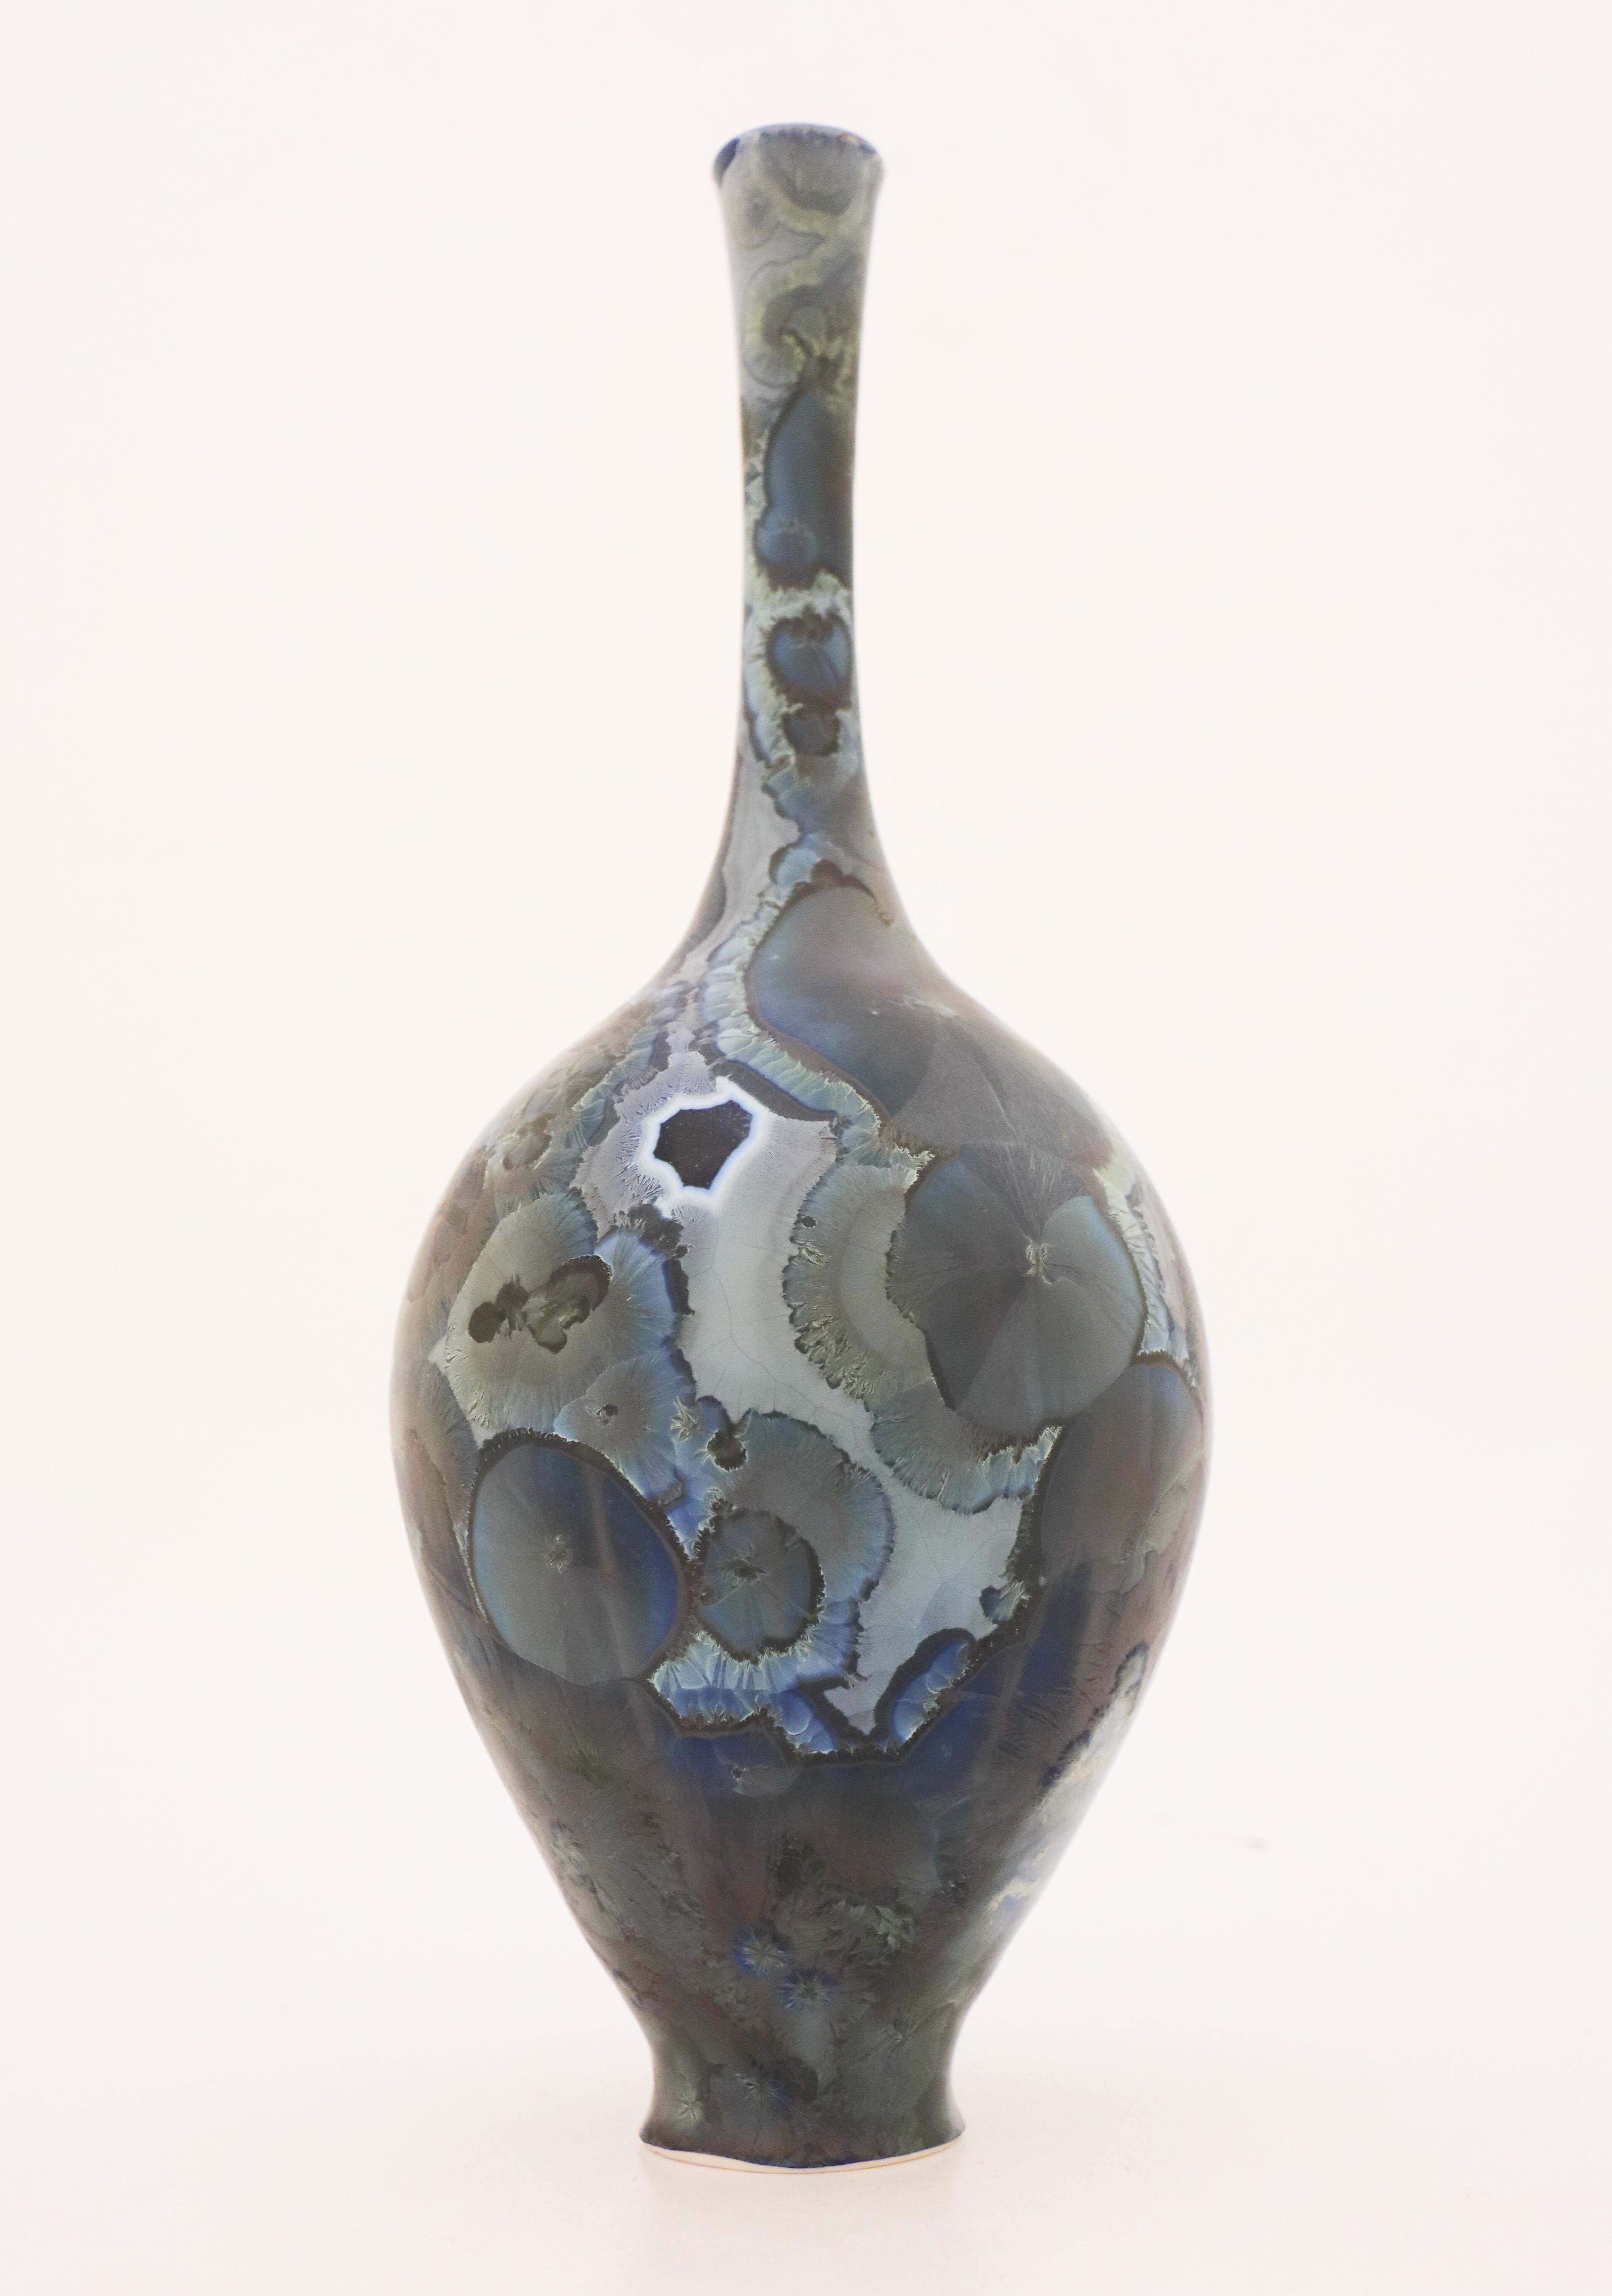 Glazed Isak Isaksson, Vase with Crystalline Glaze, Contemporary Swedish Ceramicist